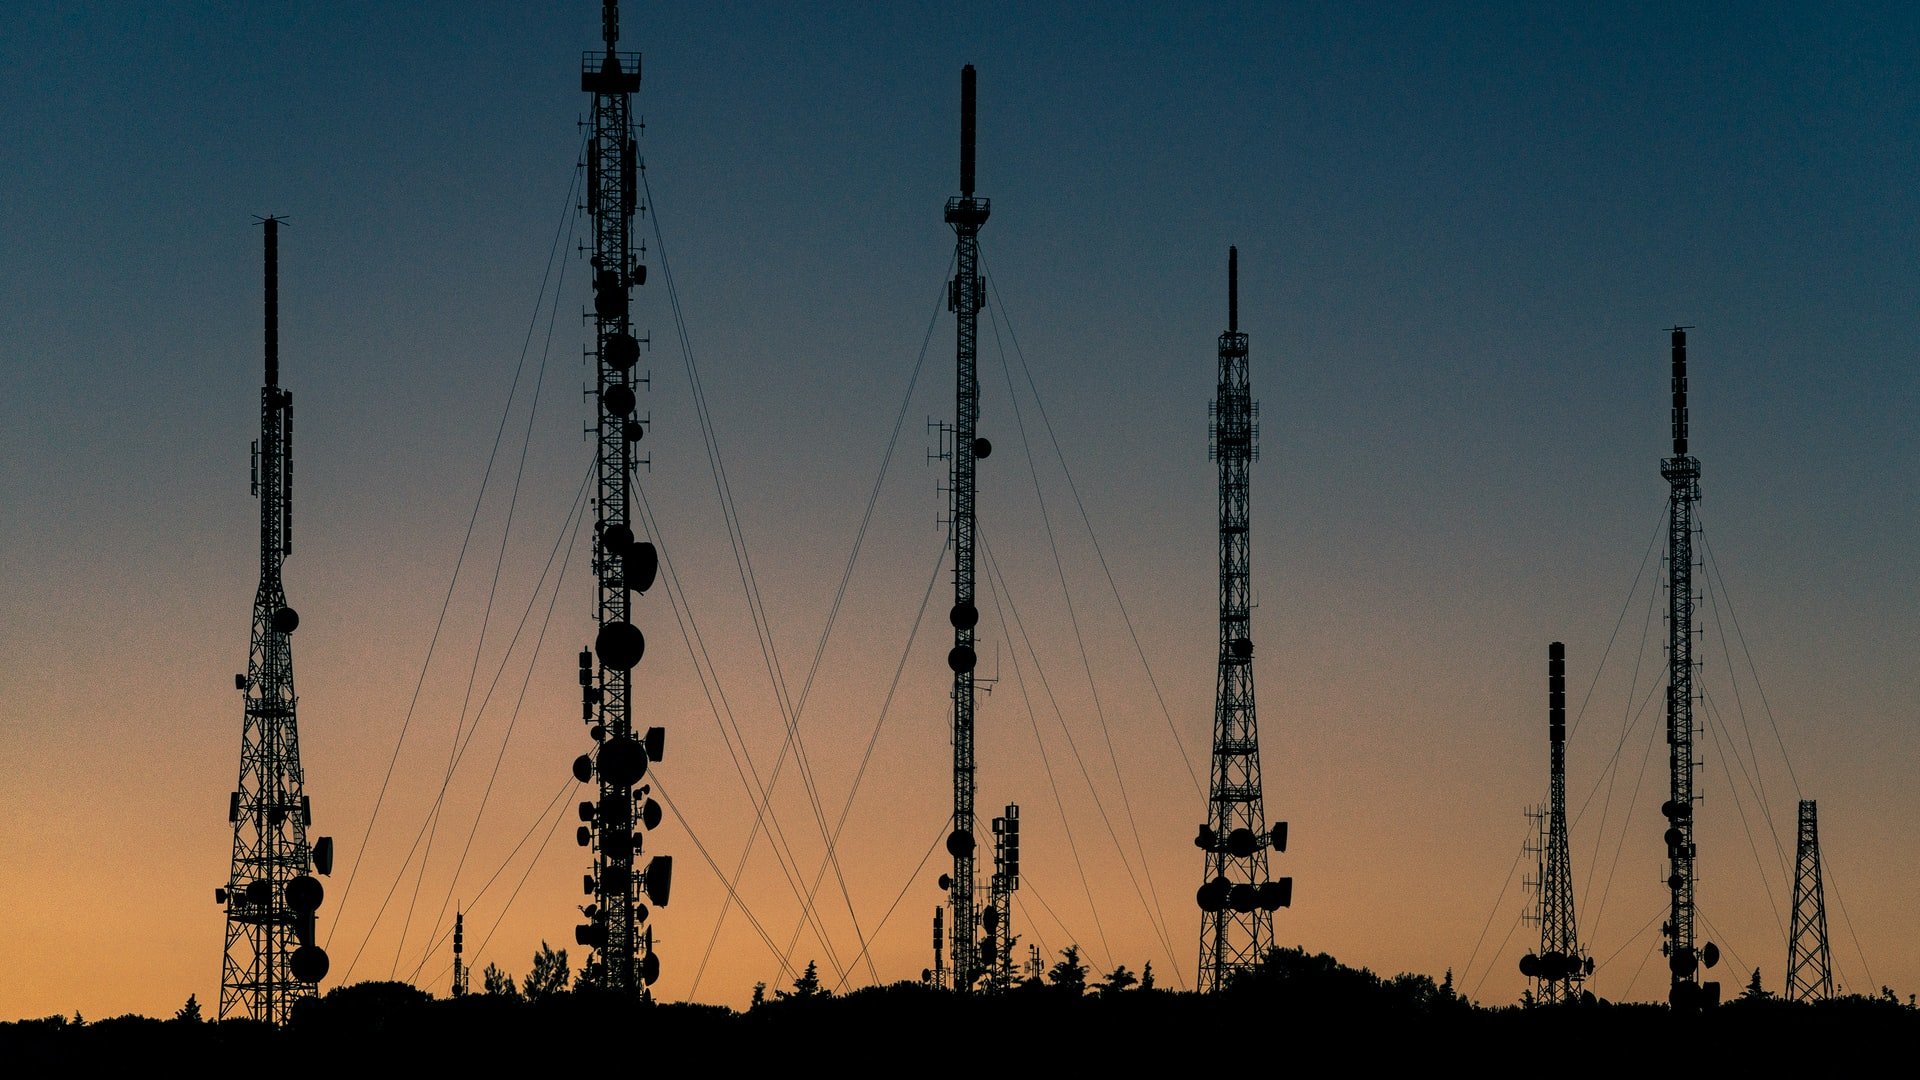 telecommunication towers at sunrise/sunset